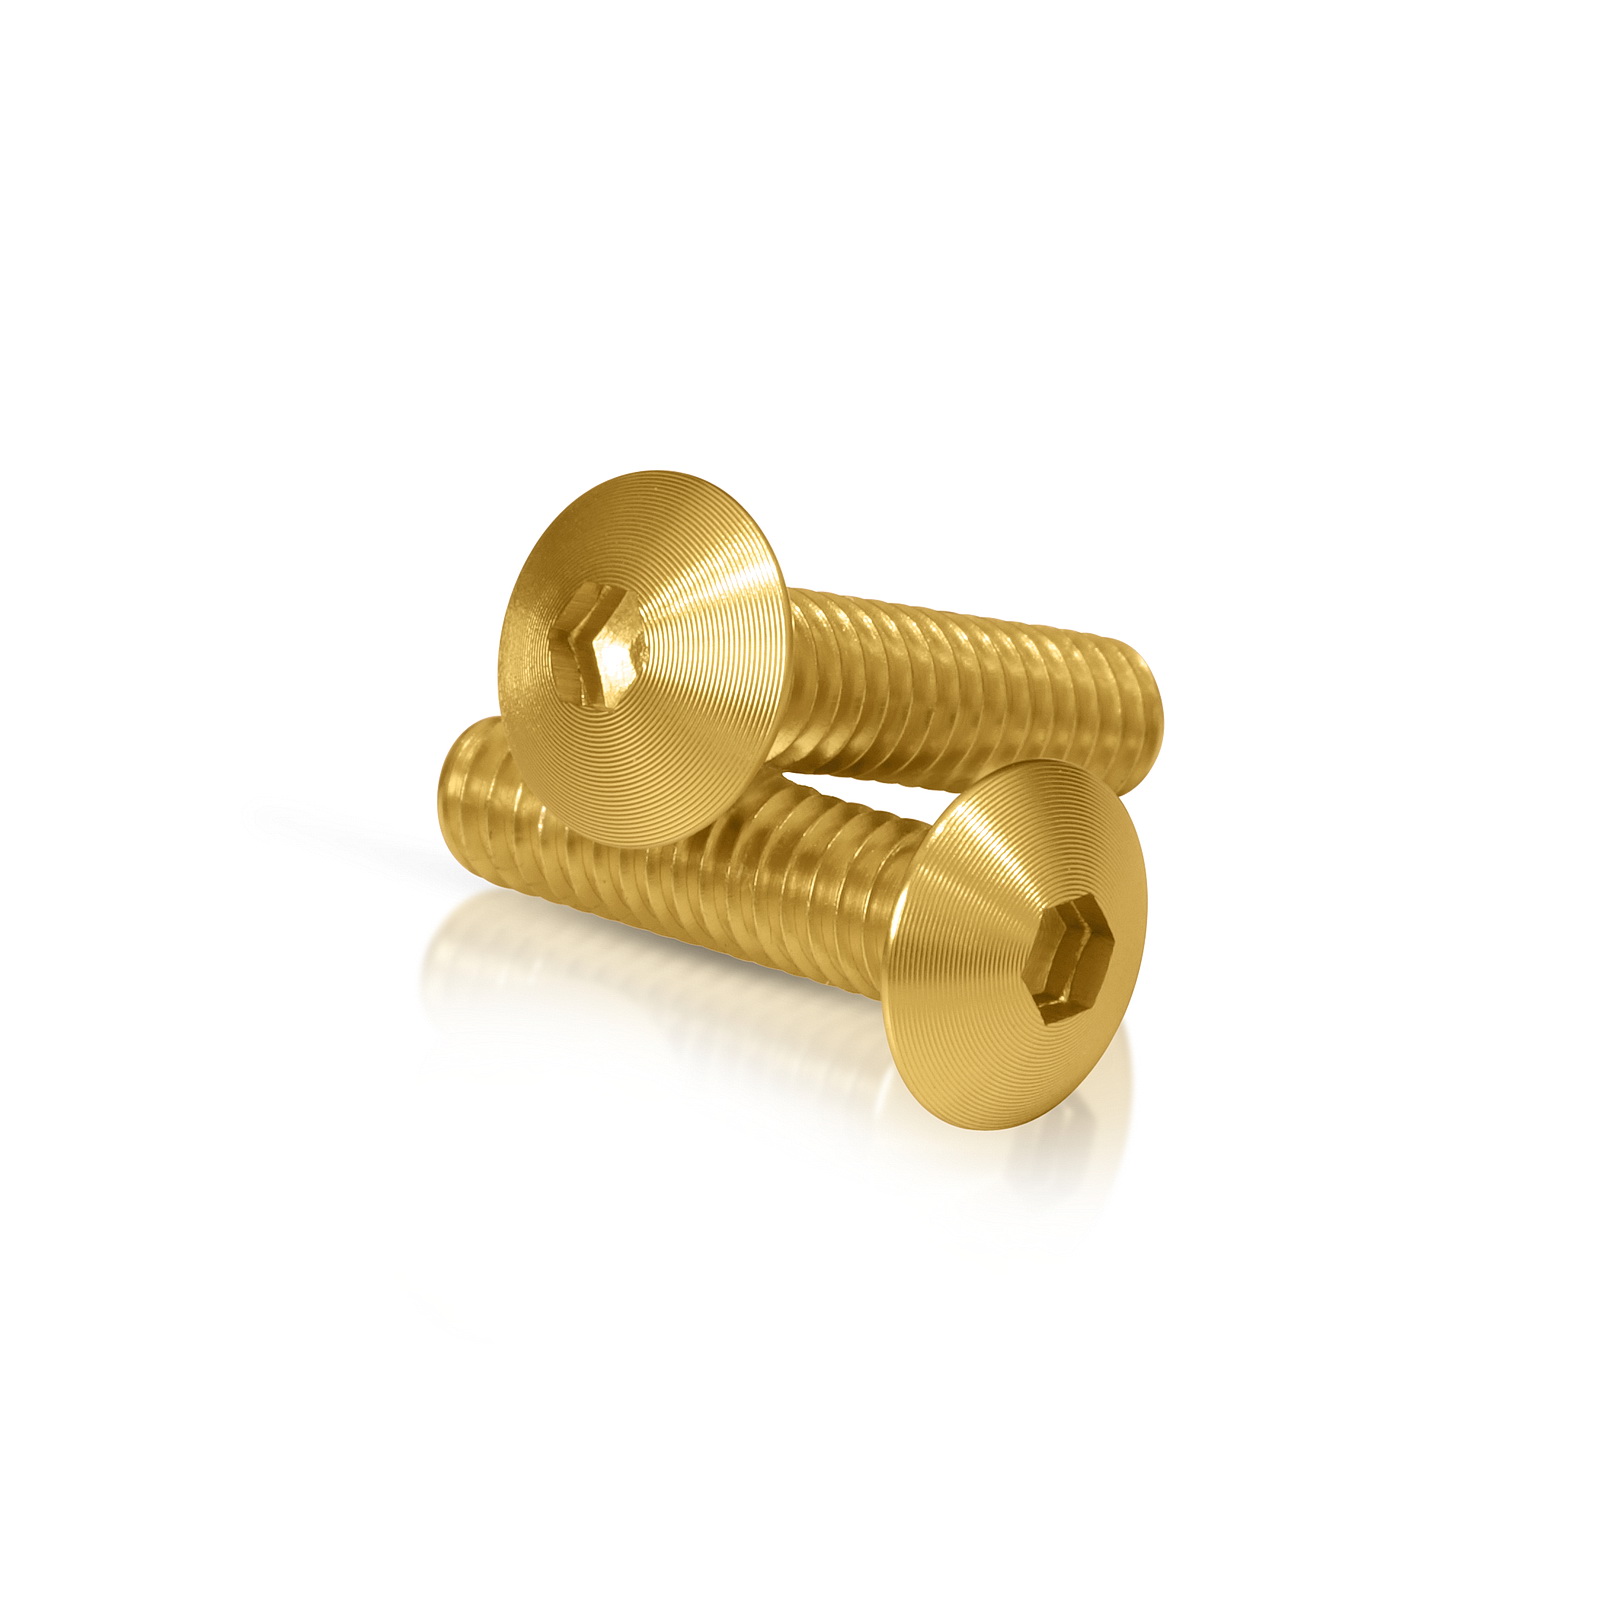 Gold Anodized Aluminum Bolt 1/4-20 Thread, length 1'', 5/32'' Hex Broach